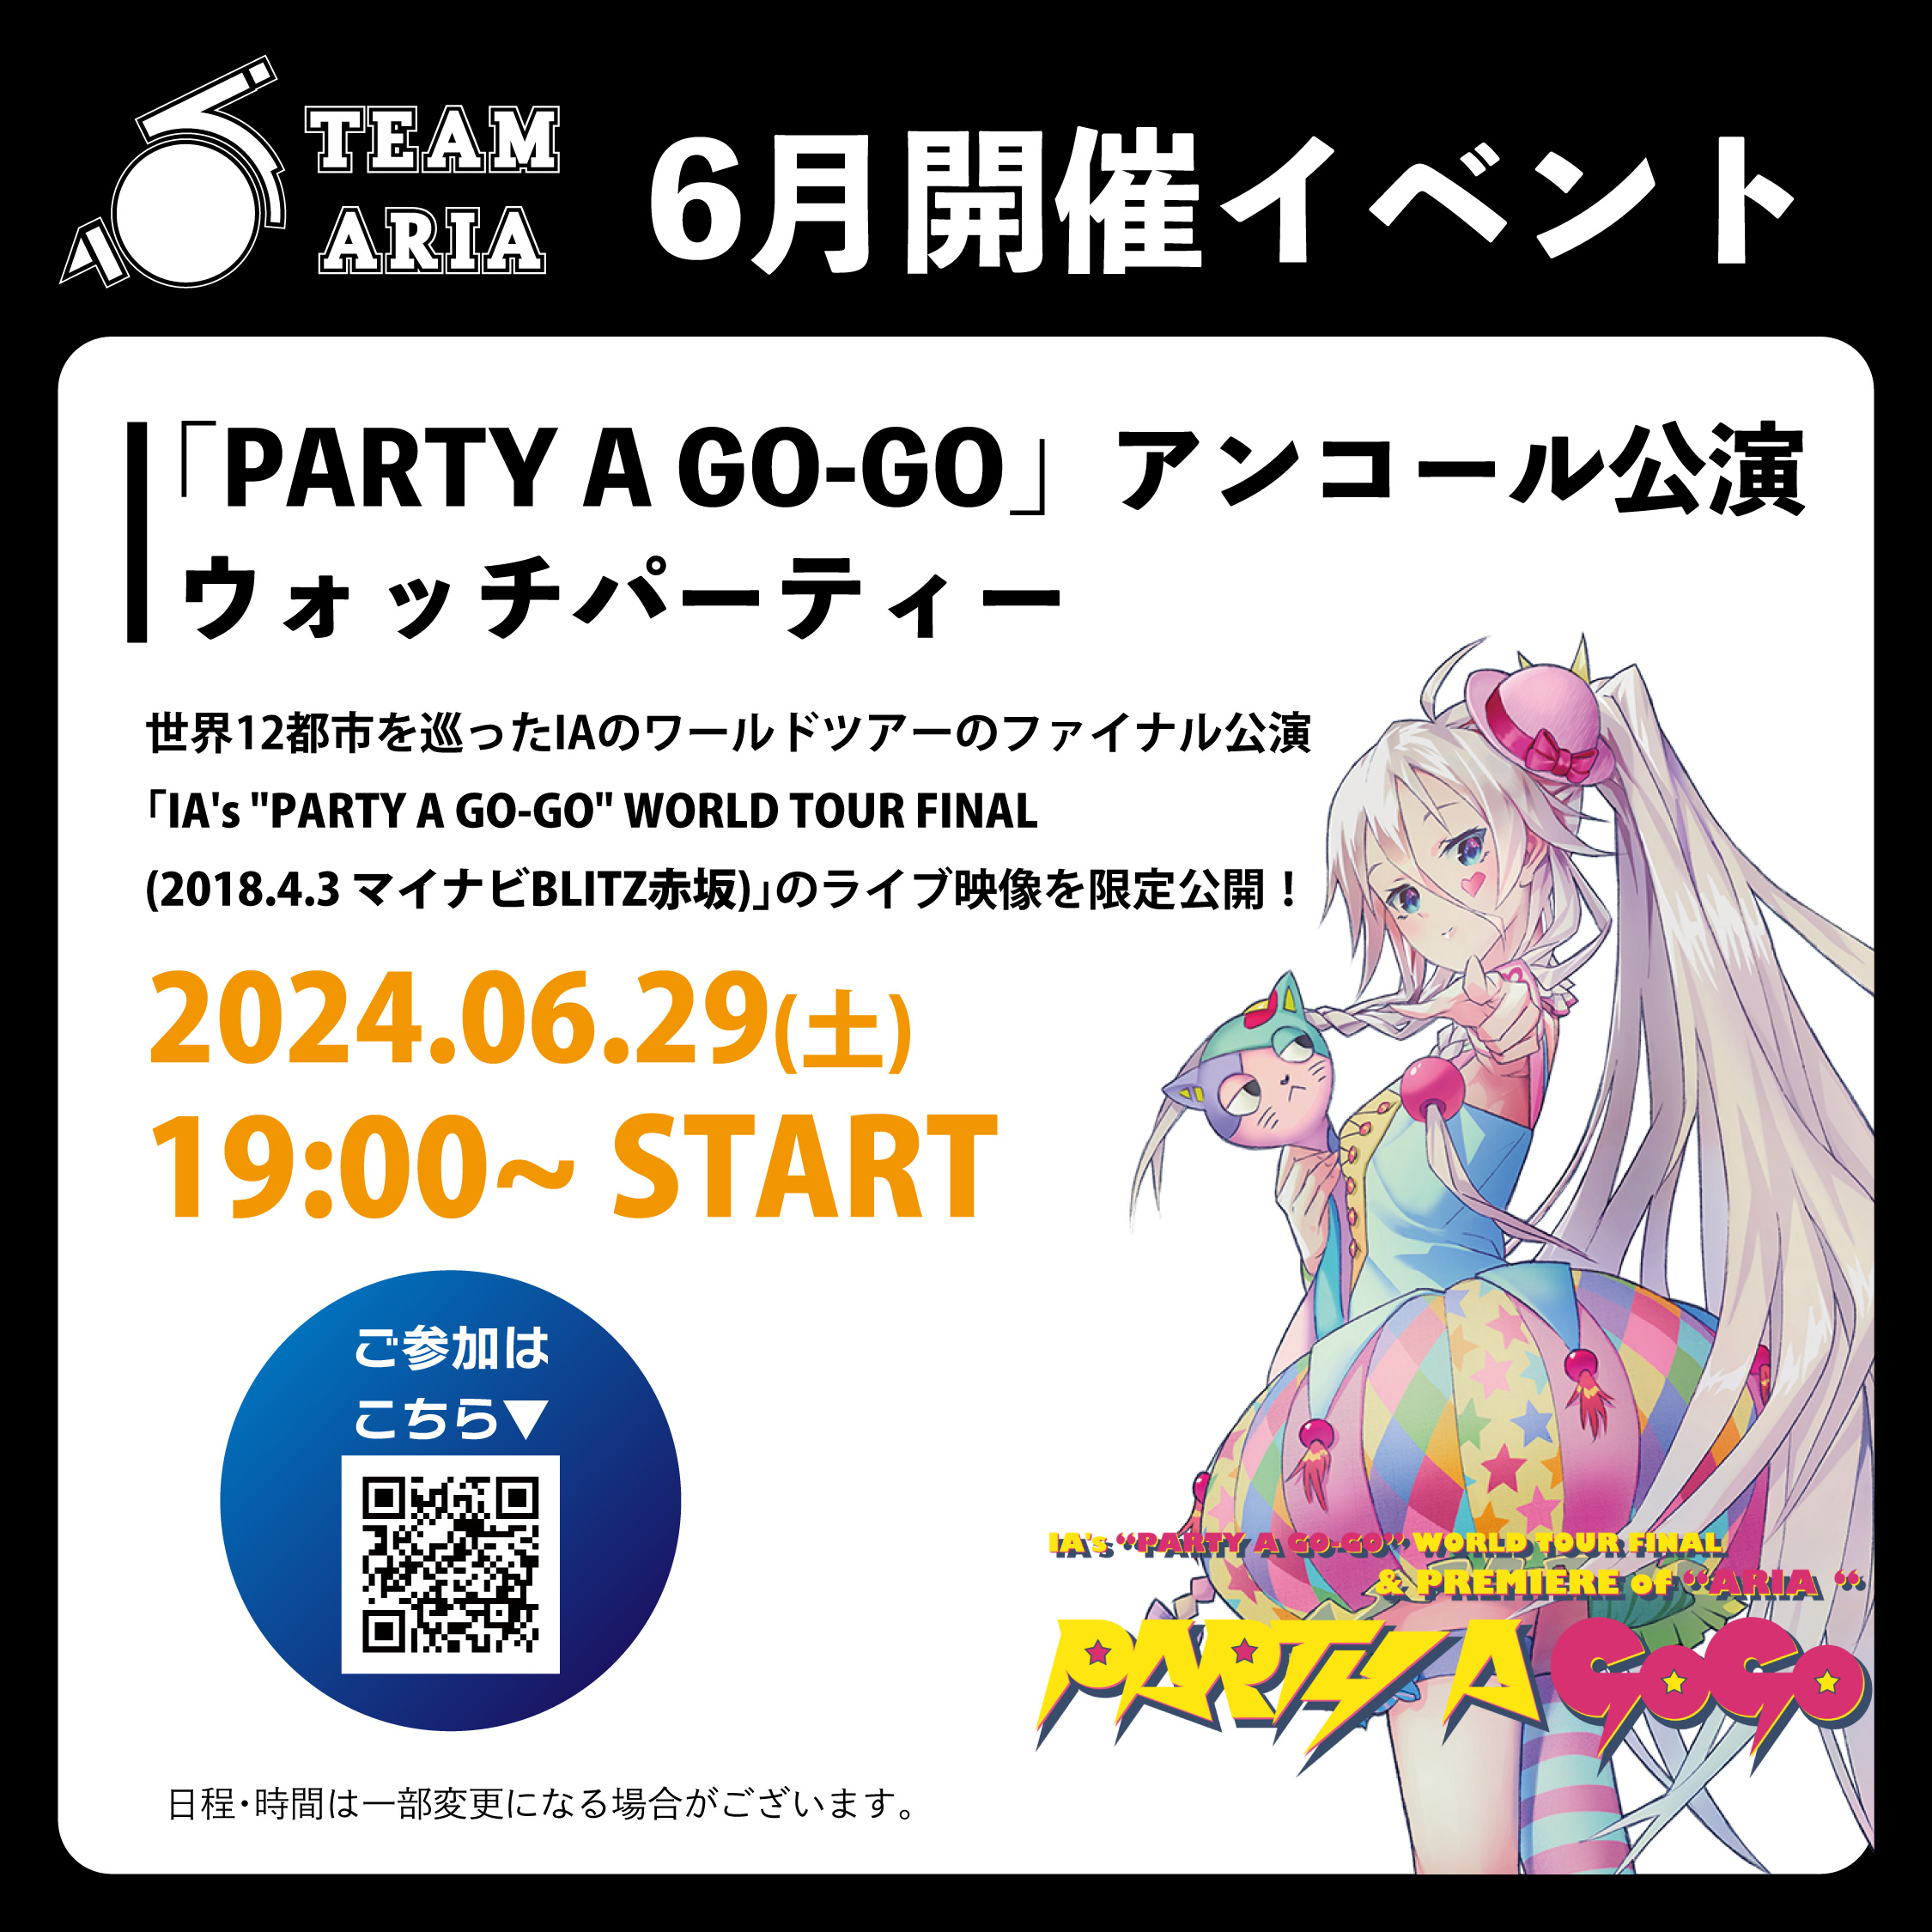 【EVENT INFO】「PARTY A GO-GO アンコール配信」ウォッチパーティーが6/29(土)19:00~ファンコミュニティ「TEAM ARIA」にて開催❗️